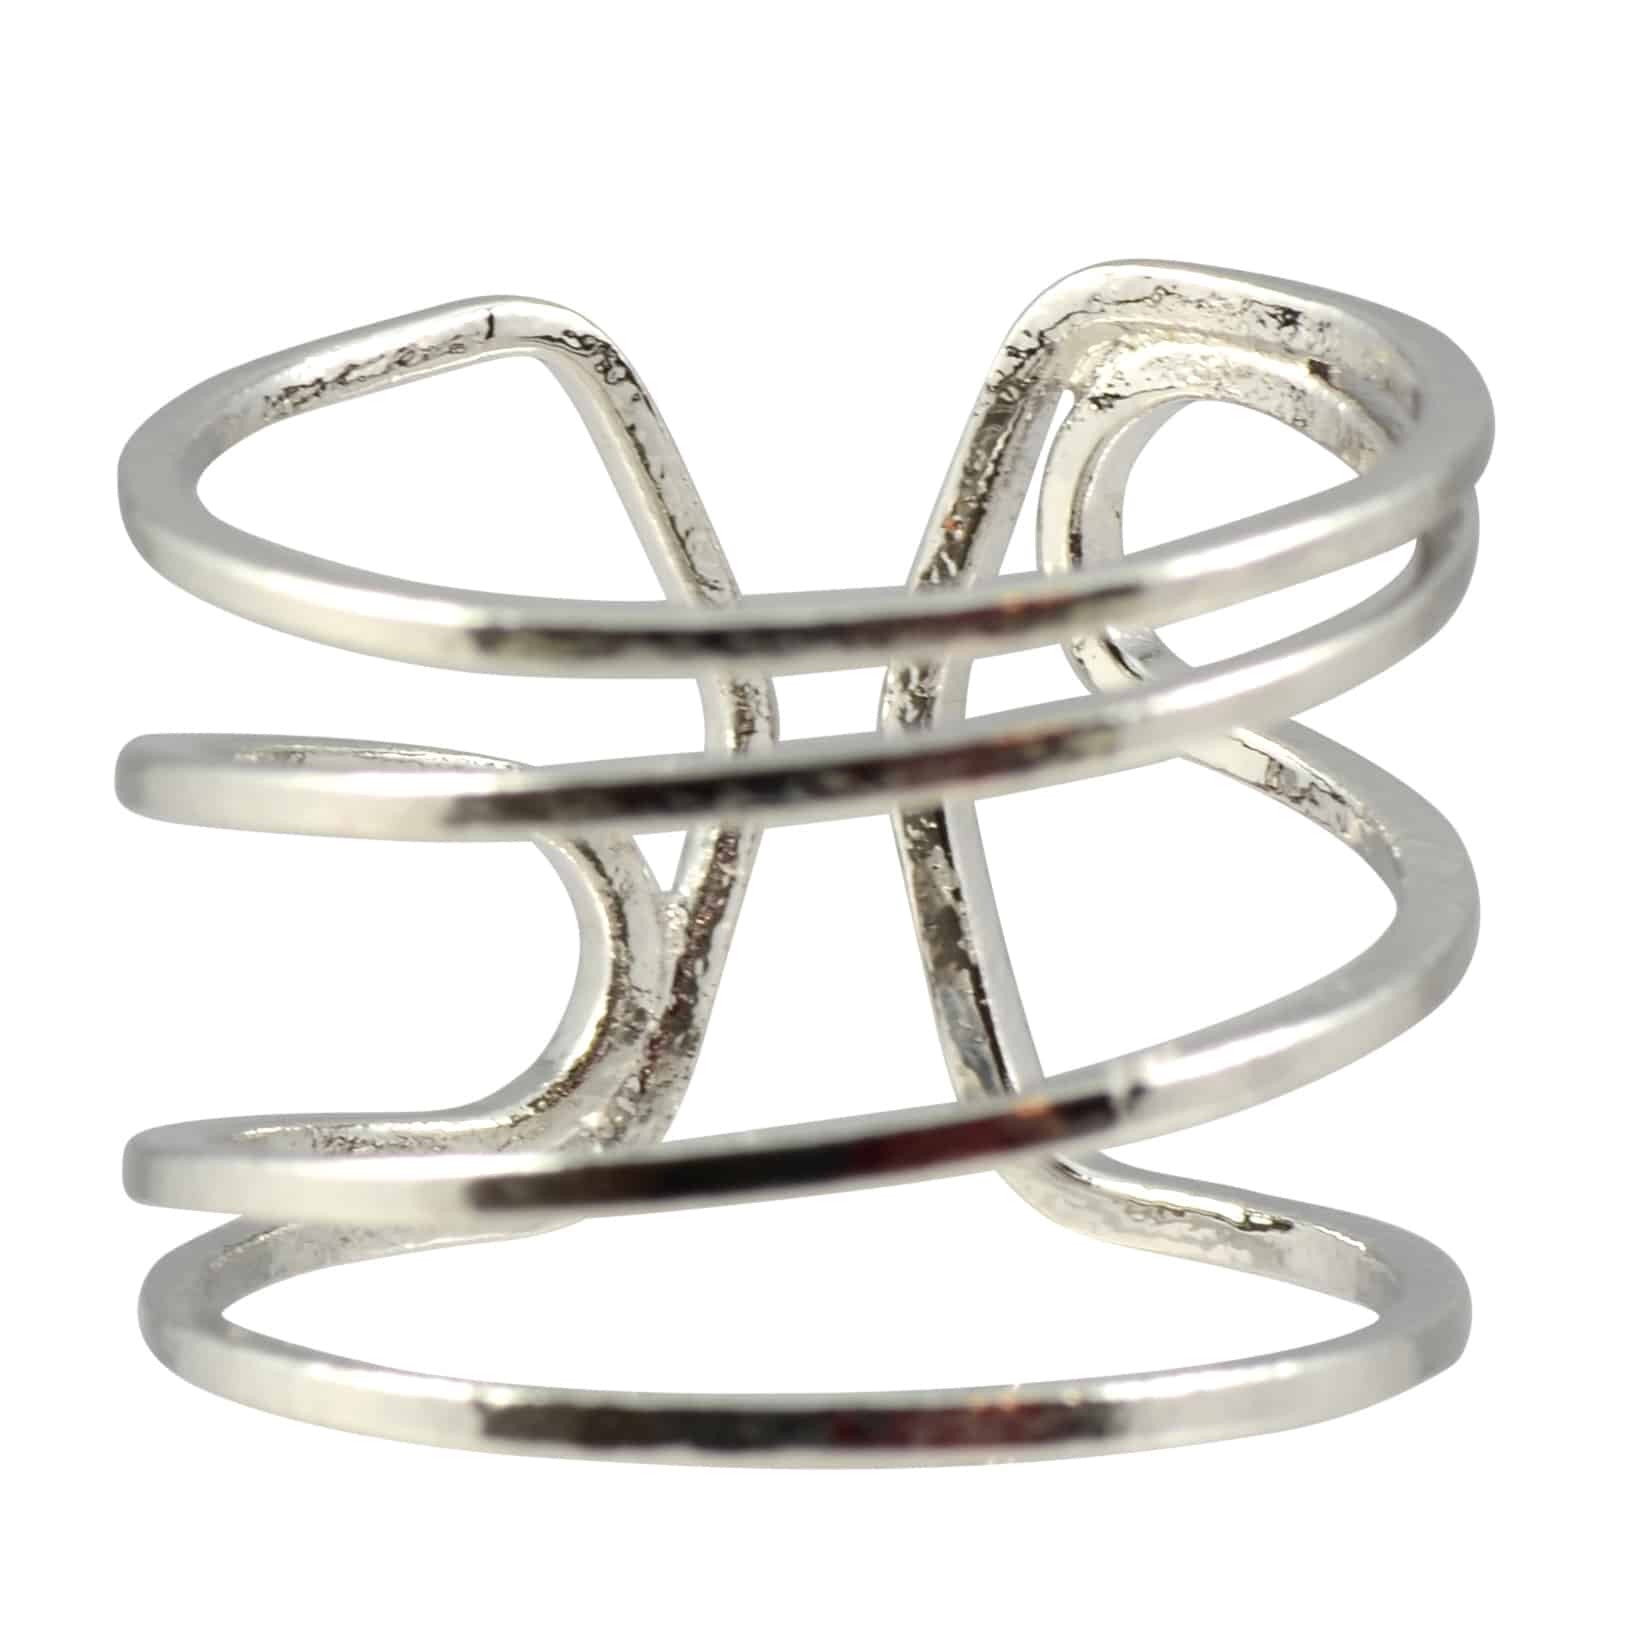 Enreverie 4 Lines Ring, Silver Plated Adjustable